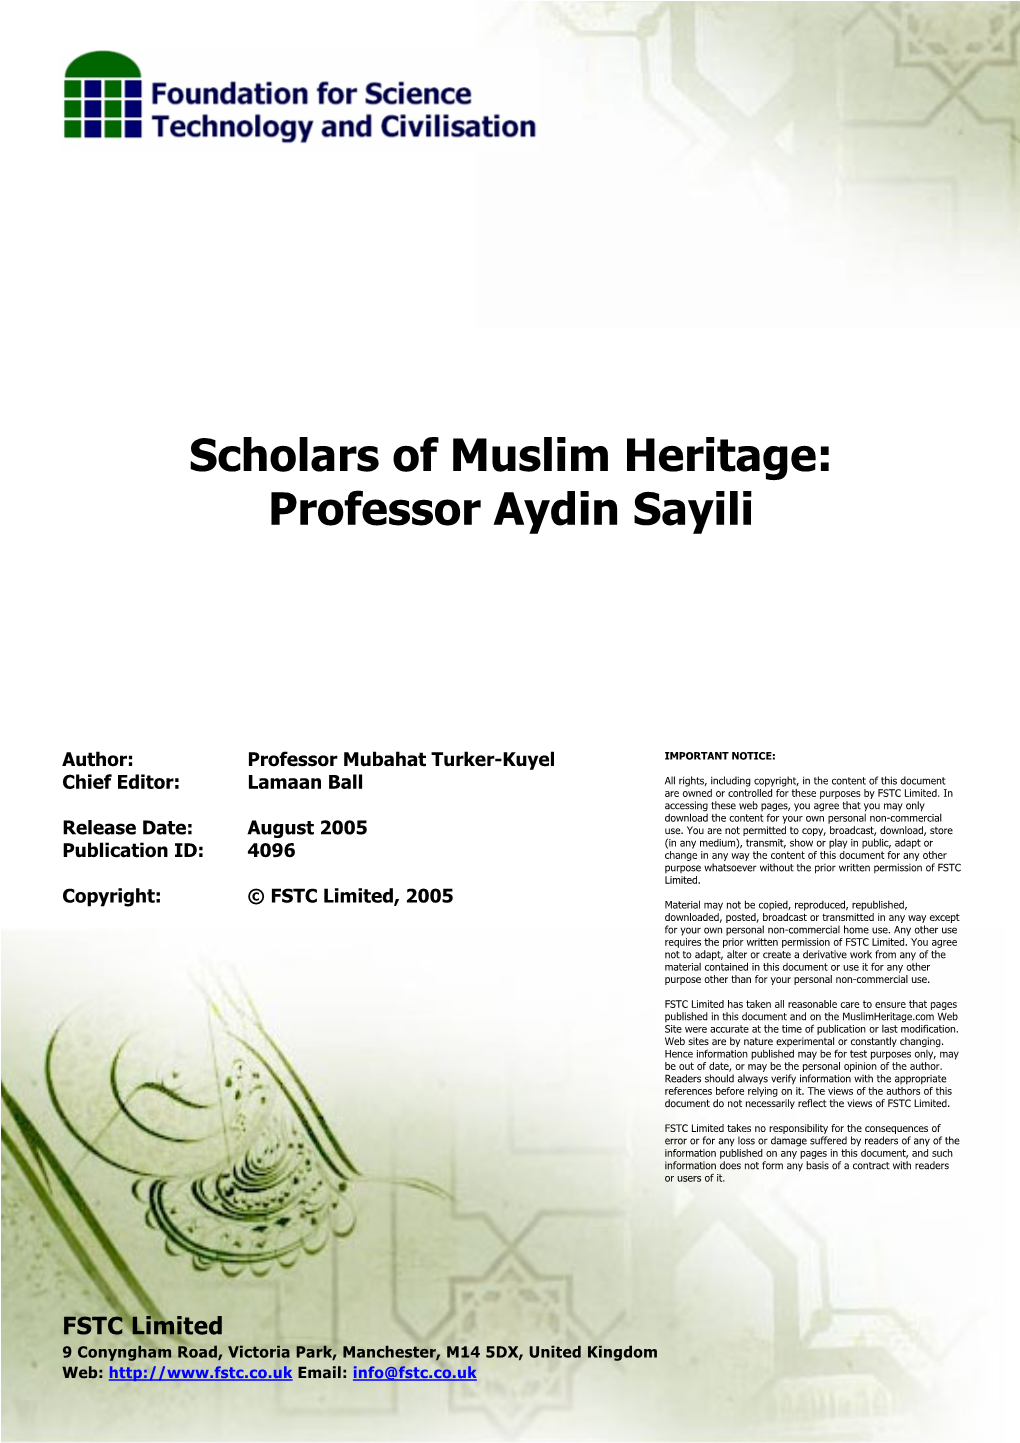 Scholars of Muslim Heritage: Professor Aydin Sayili